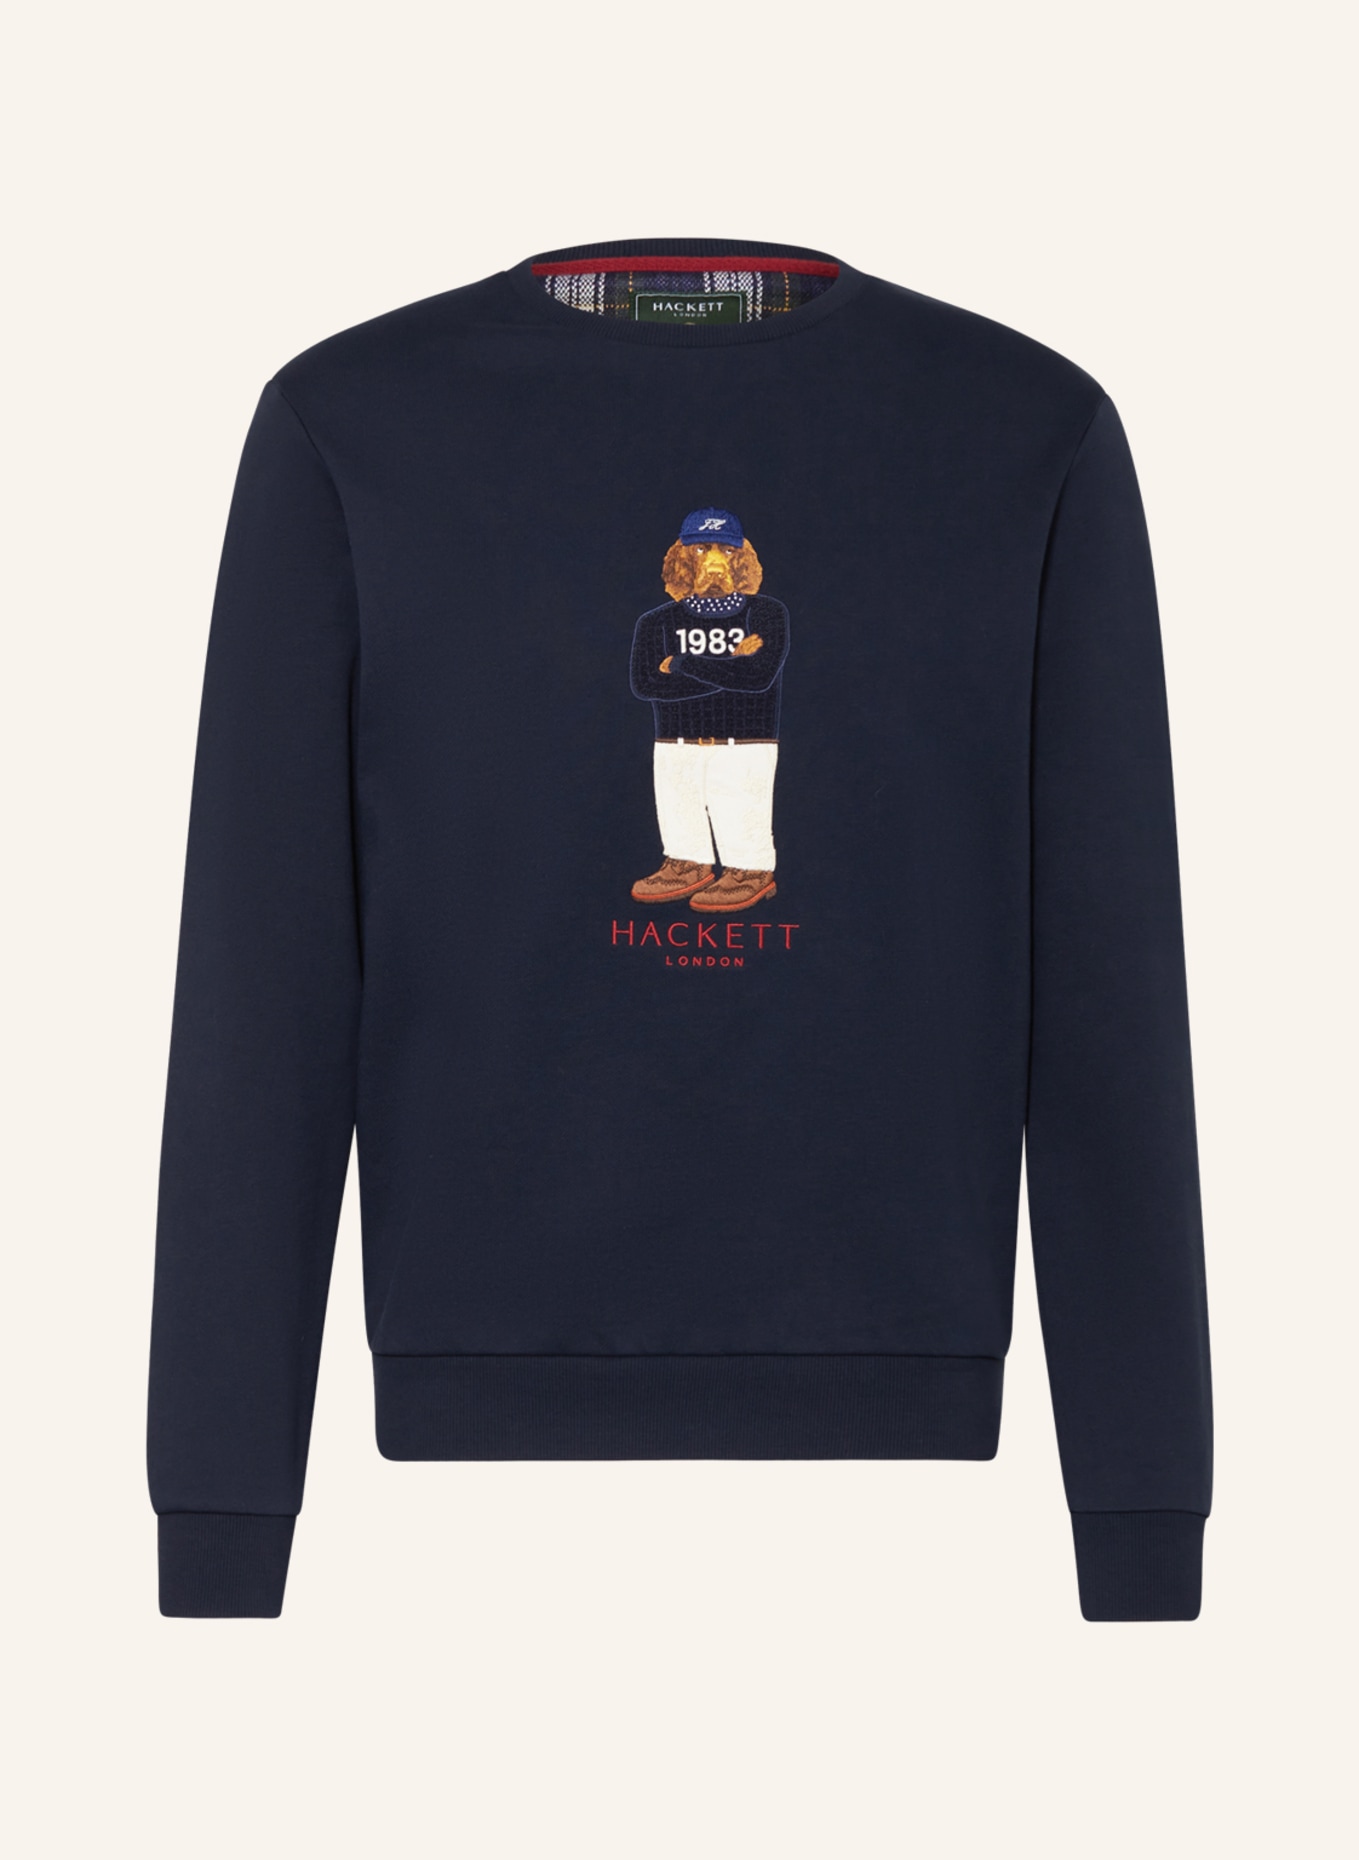 HACKETT LONDON Sweatshirt, Farbe: DUNKELBLAU/ WEISS/ BRAUN (Bild 1)